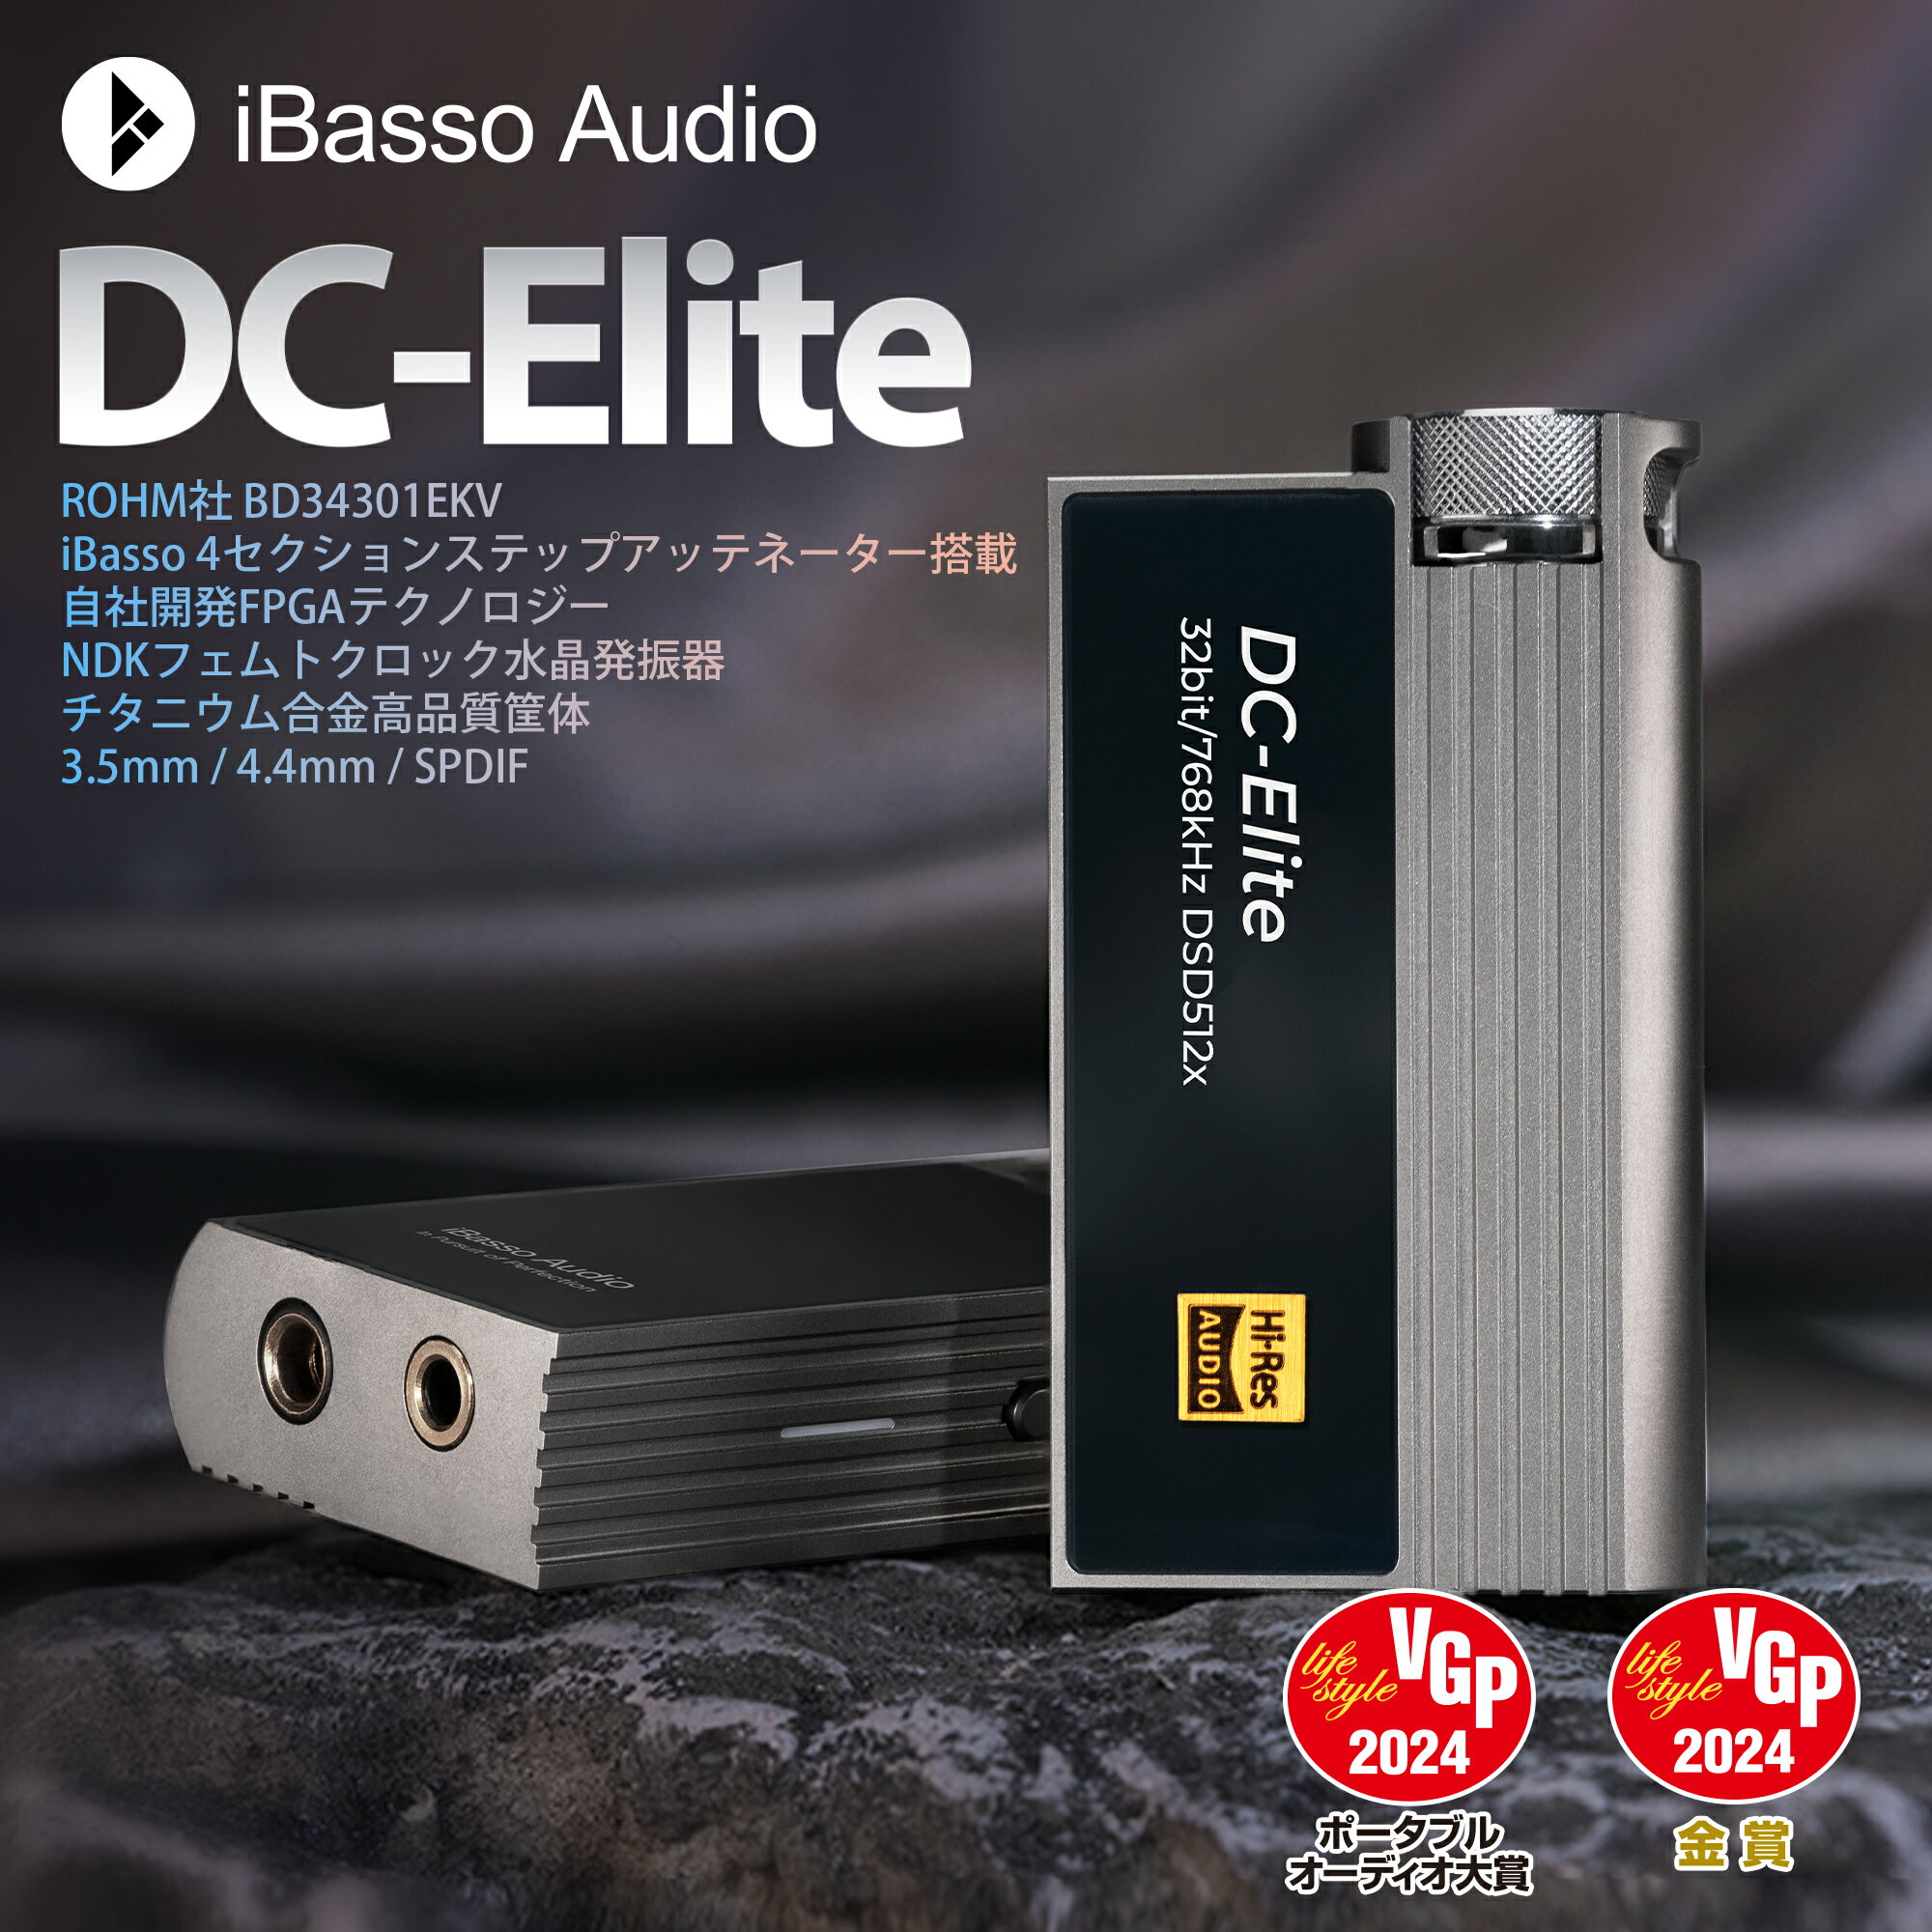 iBasso Audio DC-Elite 小型 アンプTypeC タイプC USBDAC ケーブル着脱式 ROHM社 BD34301EKV DACチップ 3.5mm 4.4mm SPDIF DSD512バランス シングルエンド出力 ドングルDAC ハイレゾ ボリュームコントロールボタン